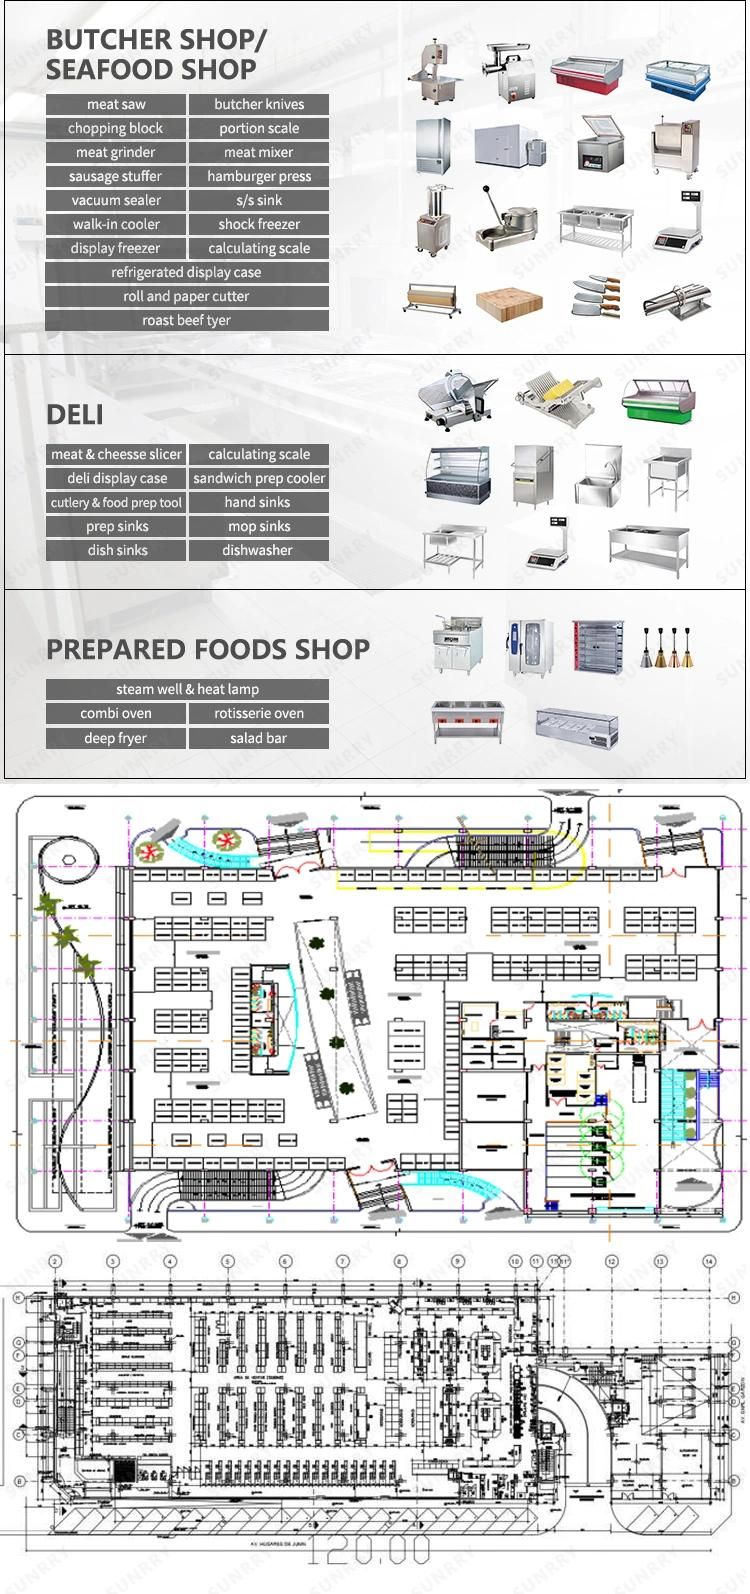 OEM/ODM Professional Custom Groceries Equipment Supermarket Shelves Refrigerator Equipment for Supermarket